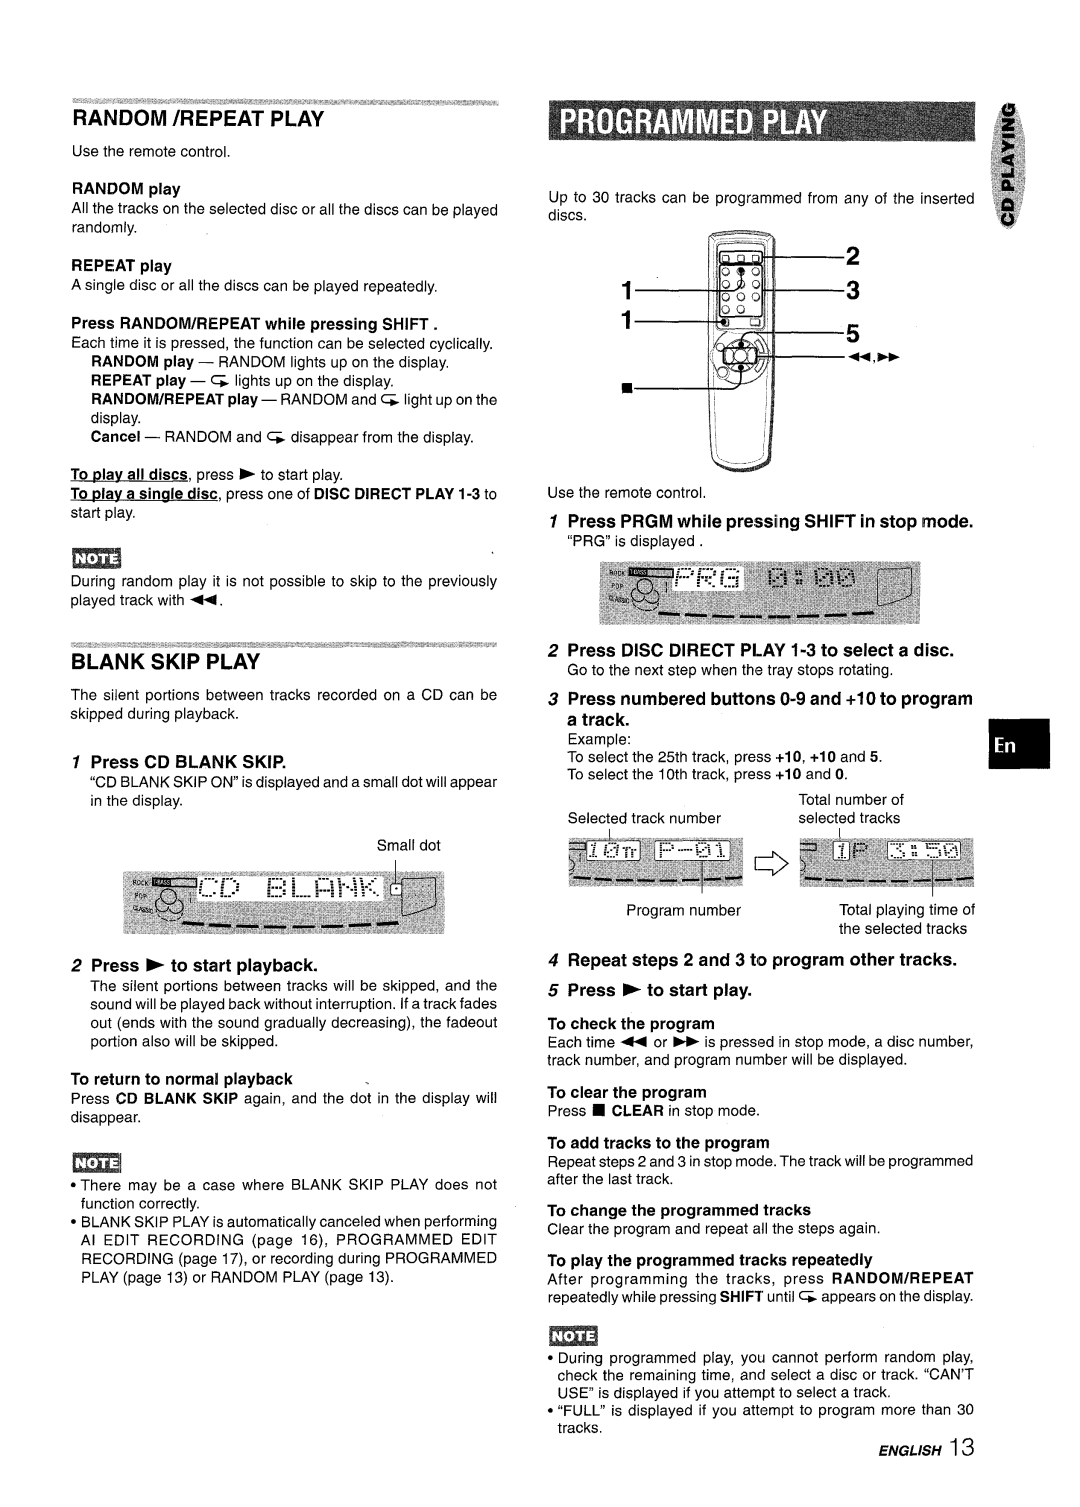 Aiwa NSX-A555 manual Press CD Blank Skip, Press E to start playback, Press Prgm while pressing Shift in stop mode 